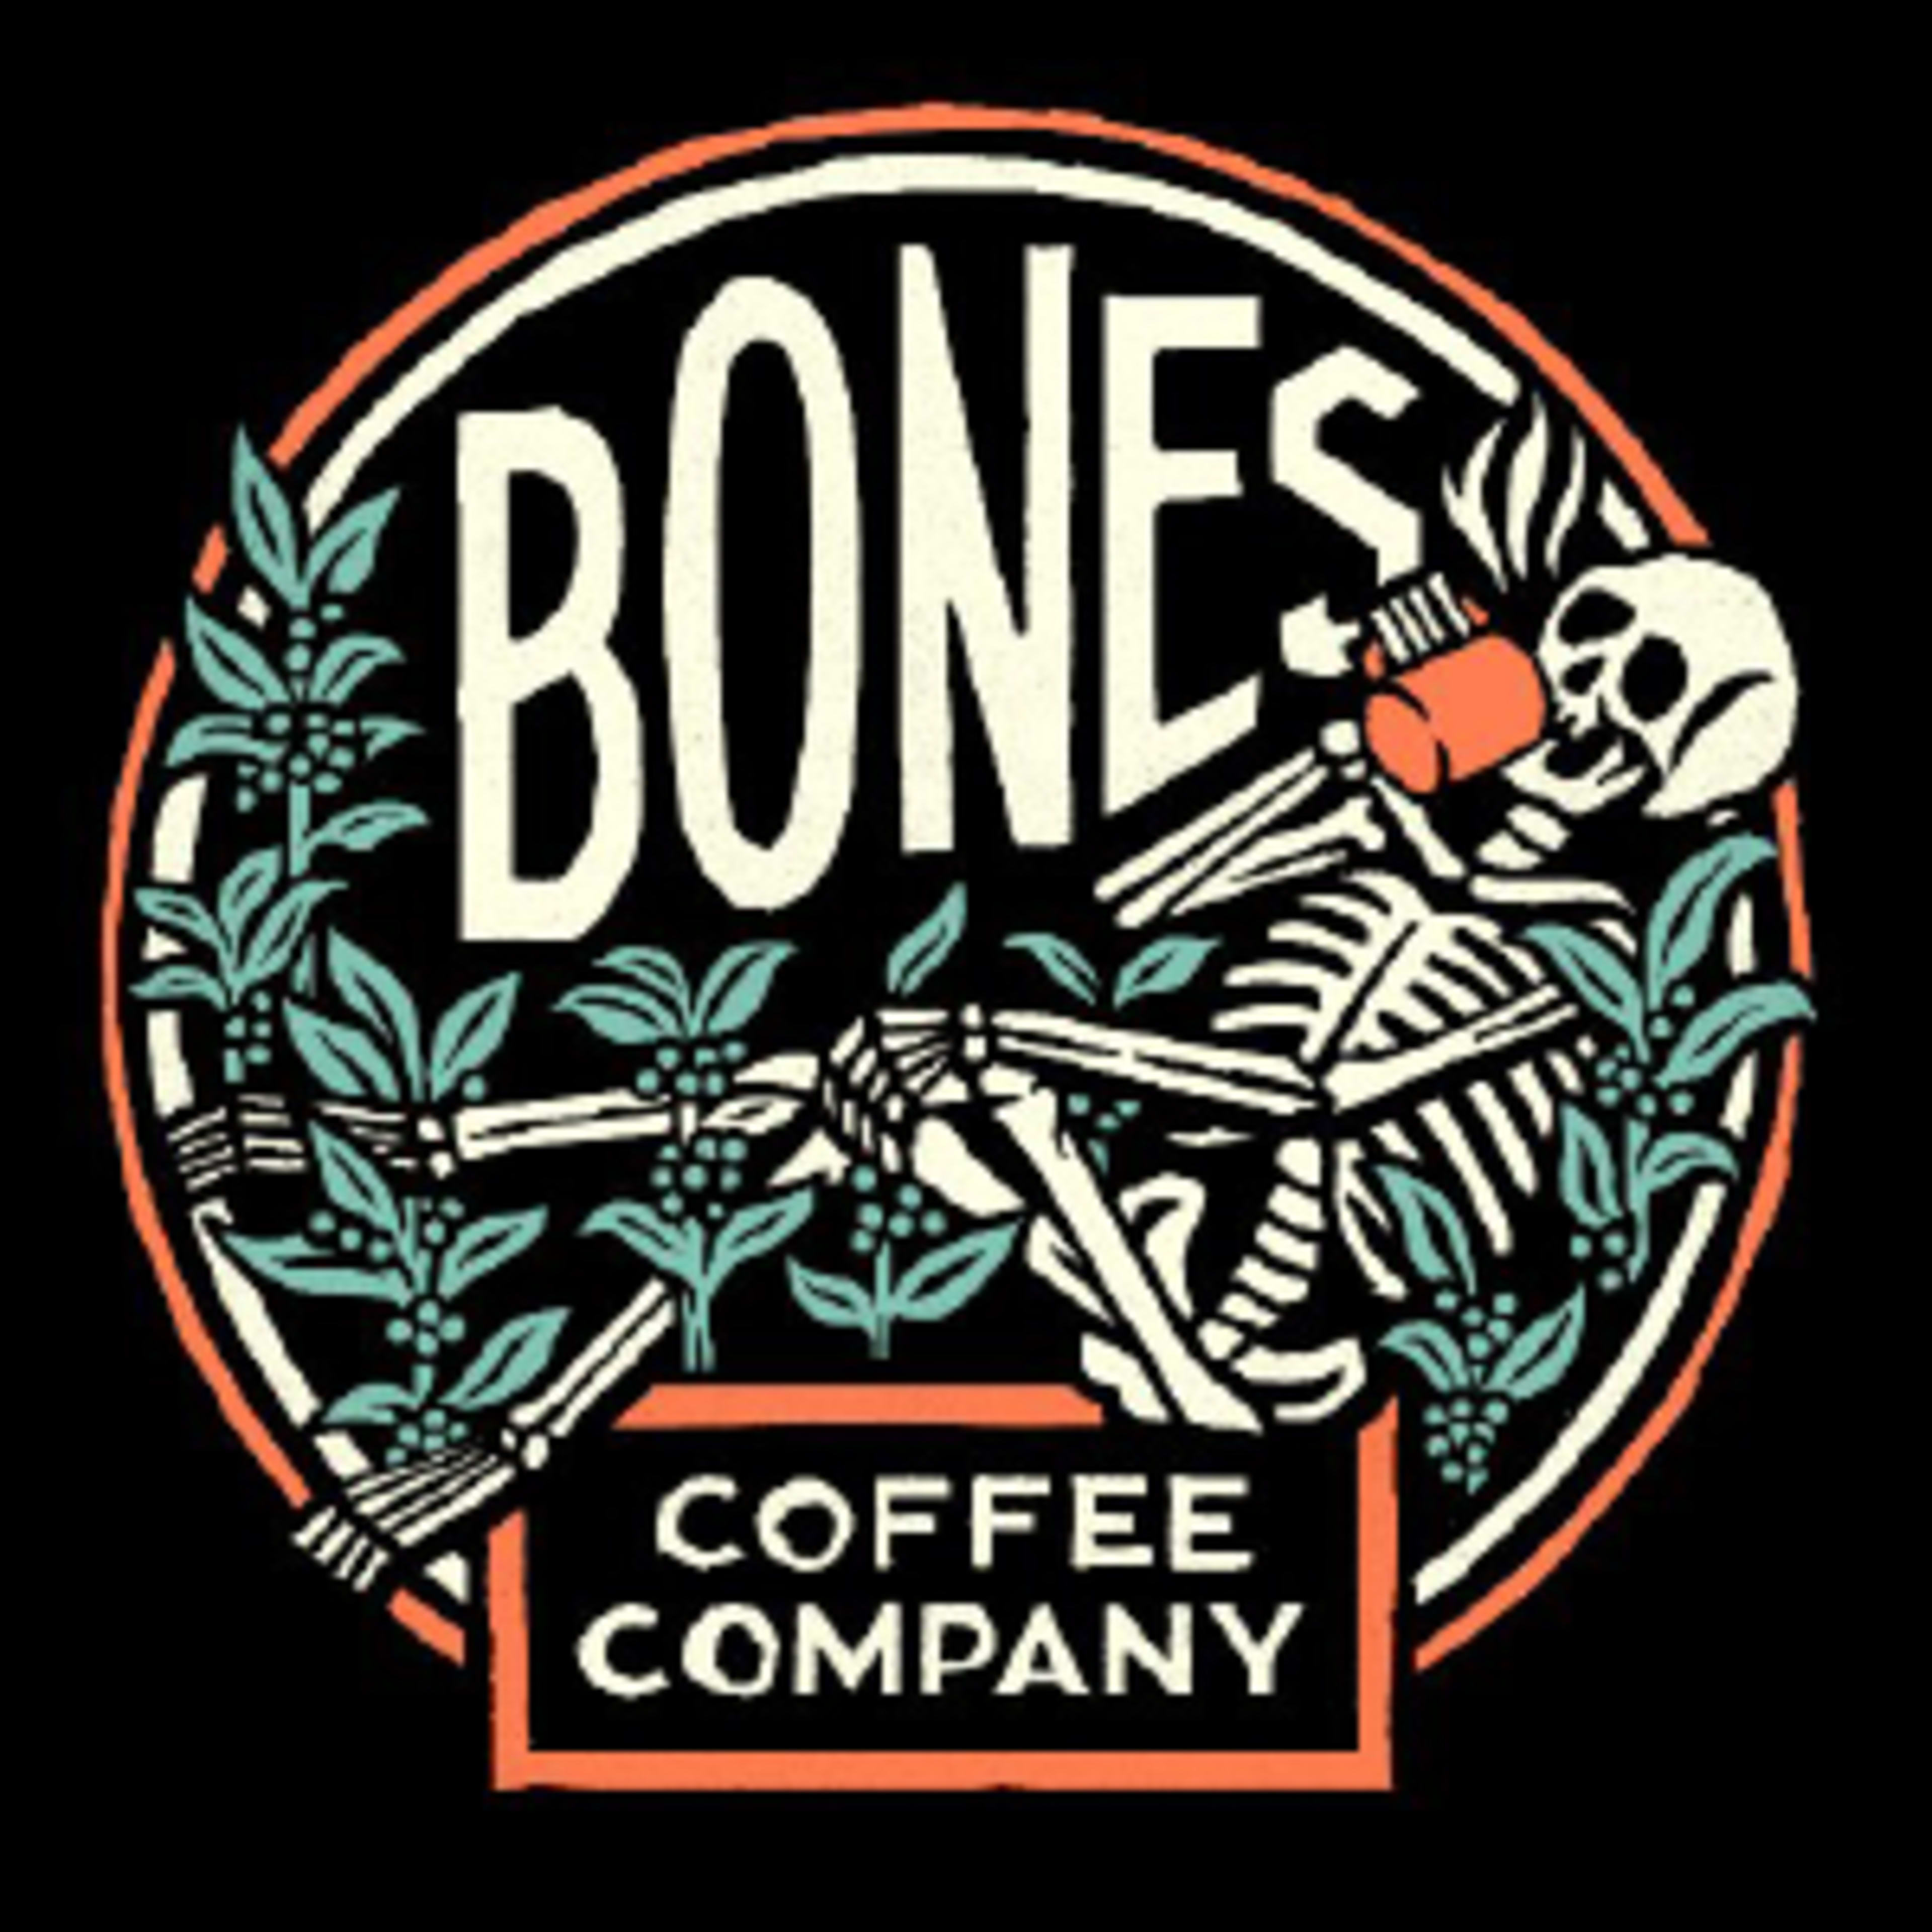 Bones Coffee Company Code